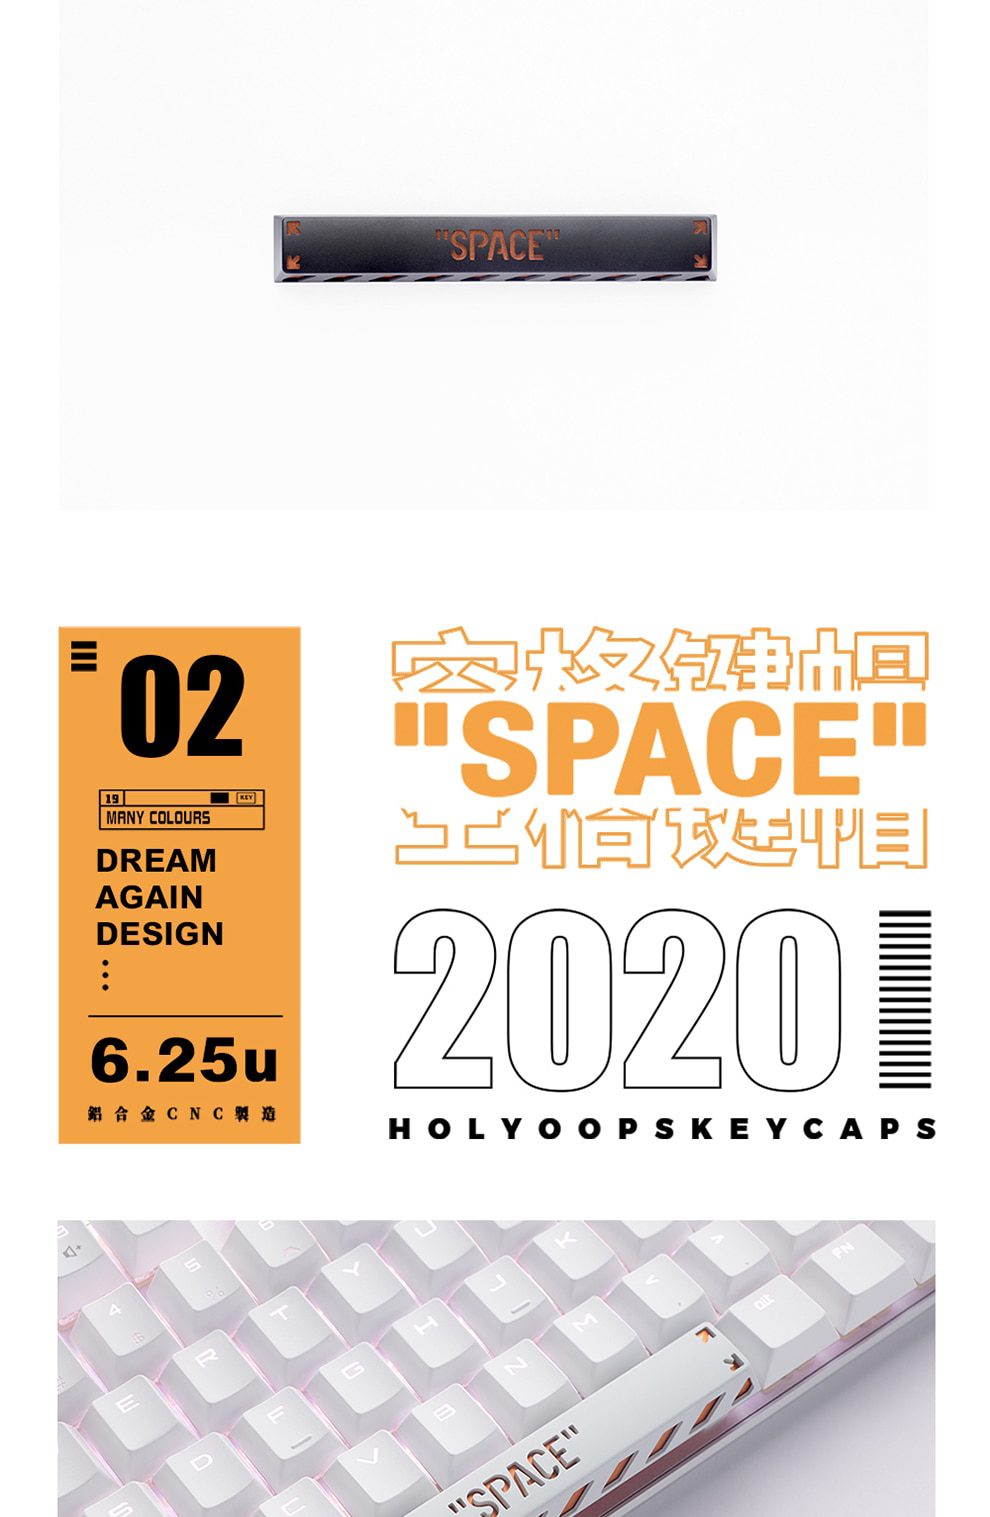 Holyoops 6.25u spacebar Artisan Keycap CNC anodized aluminum Compatible Cherry MX switches black orange purple green